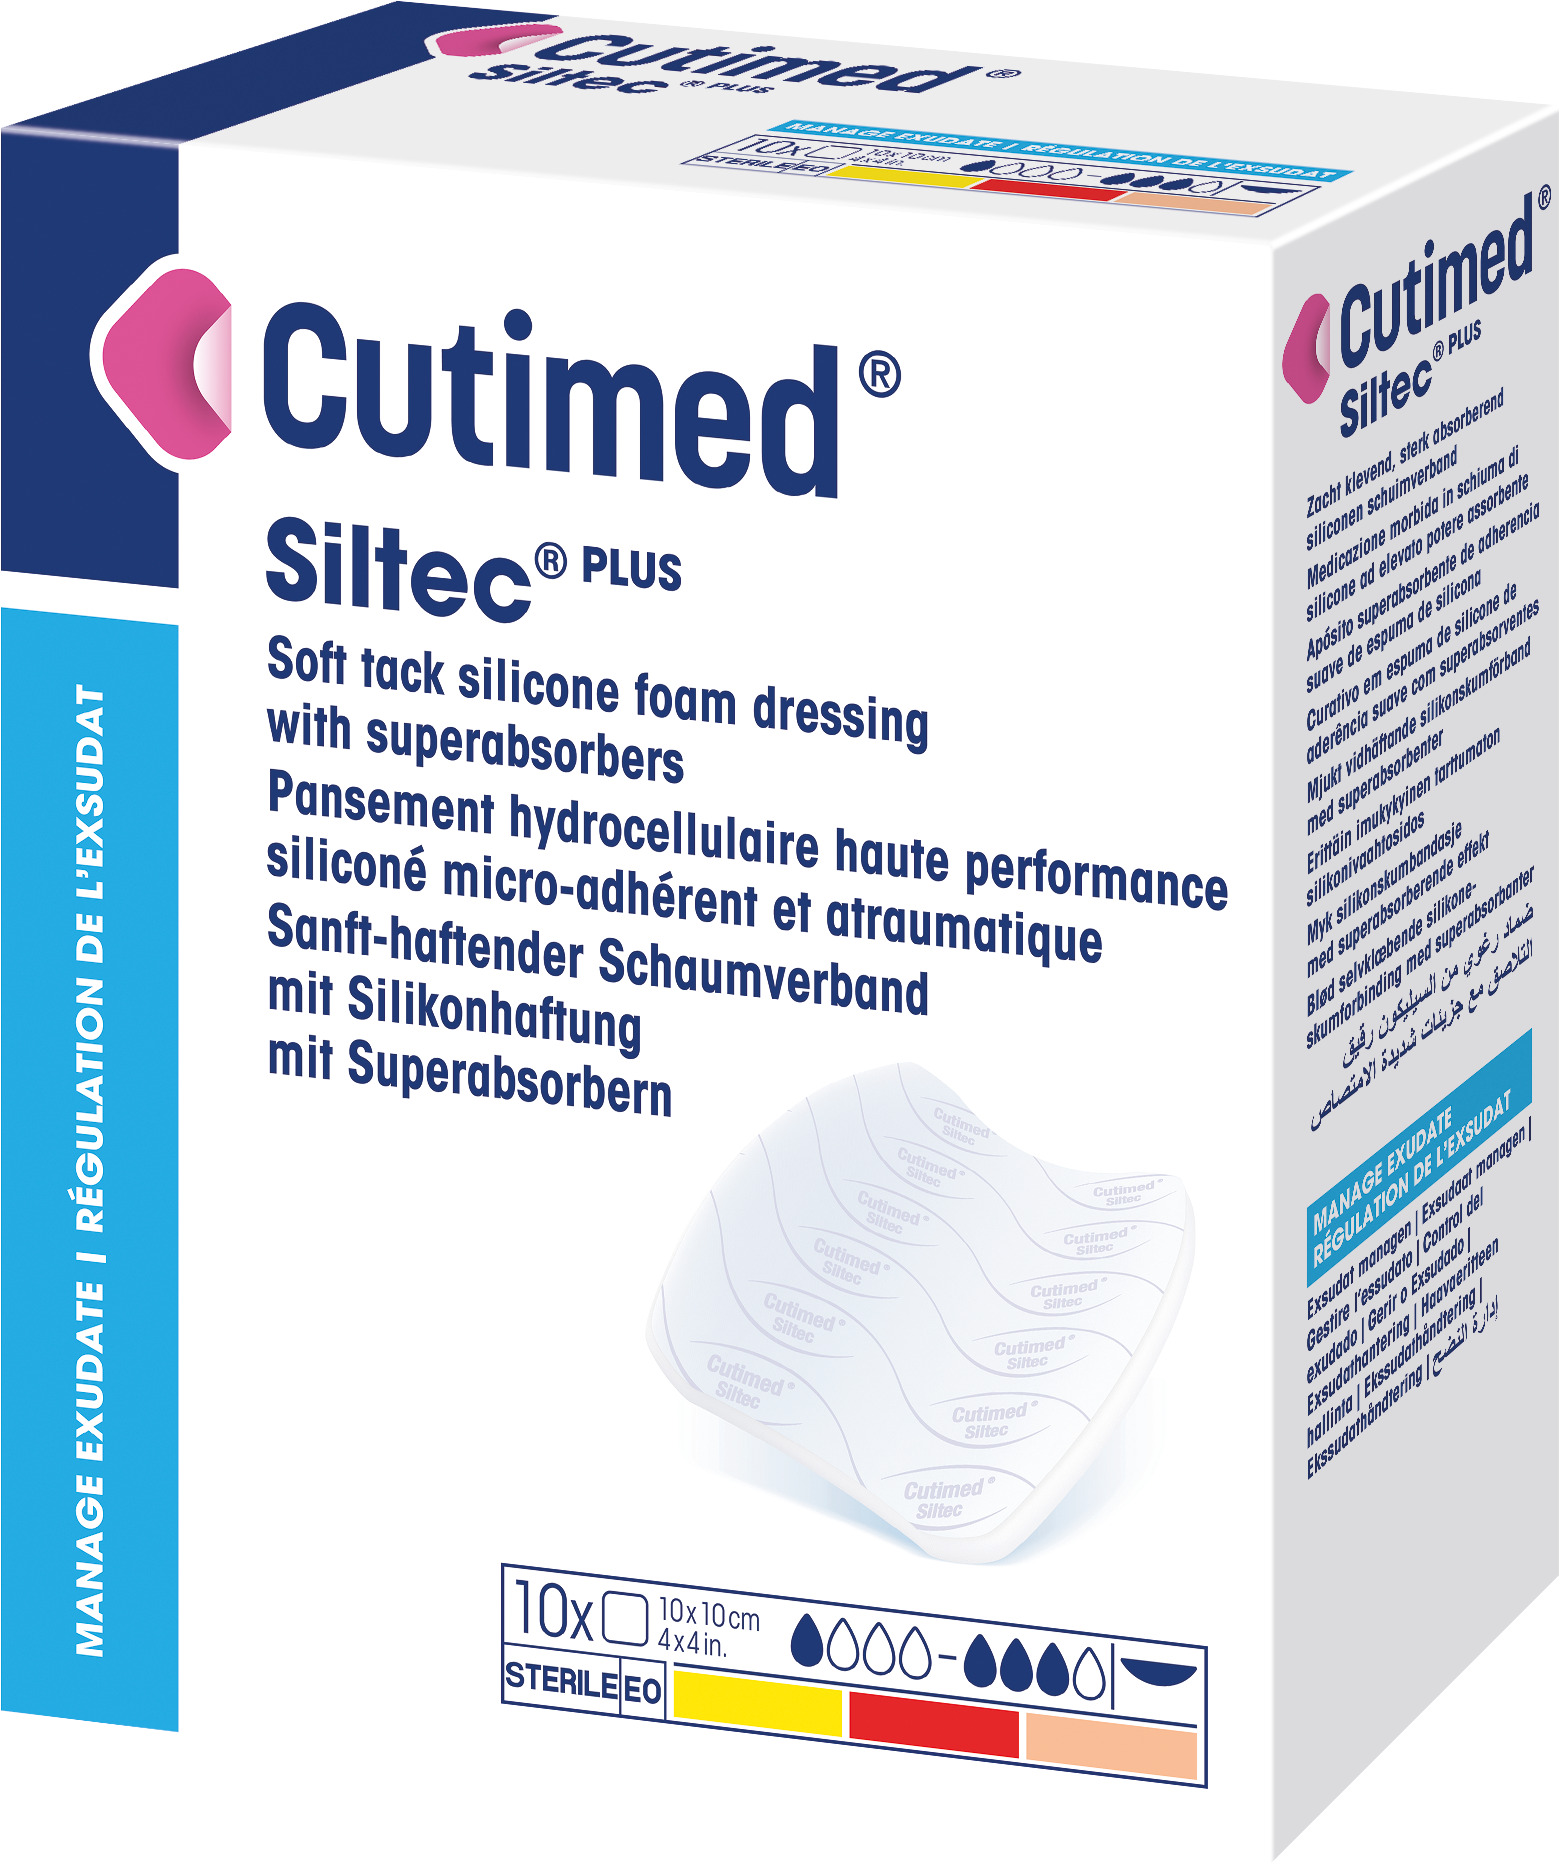 Cutimed Siltec